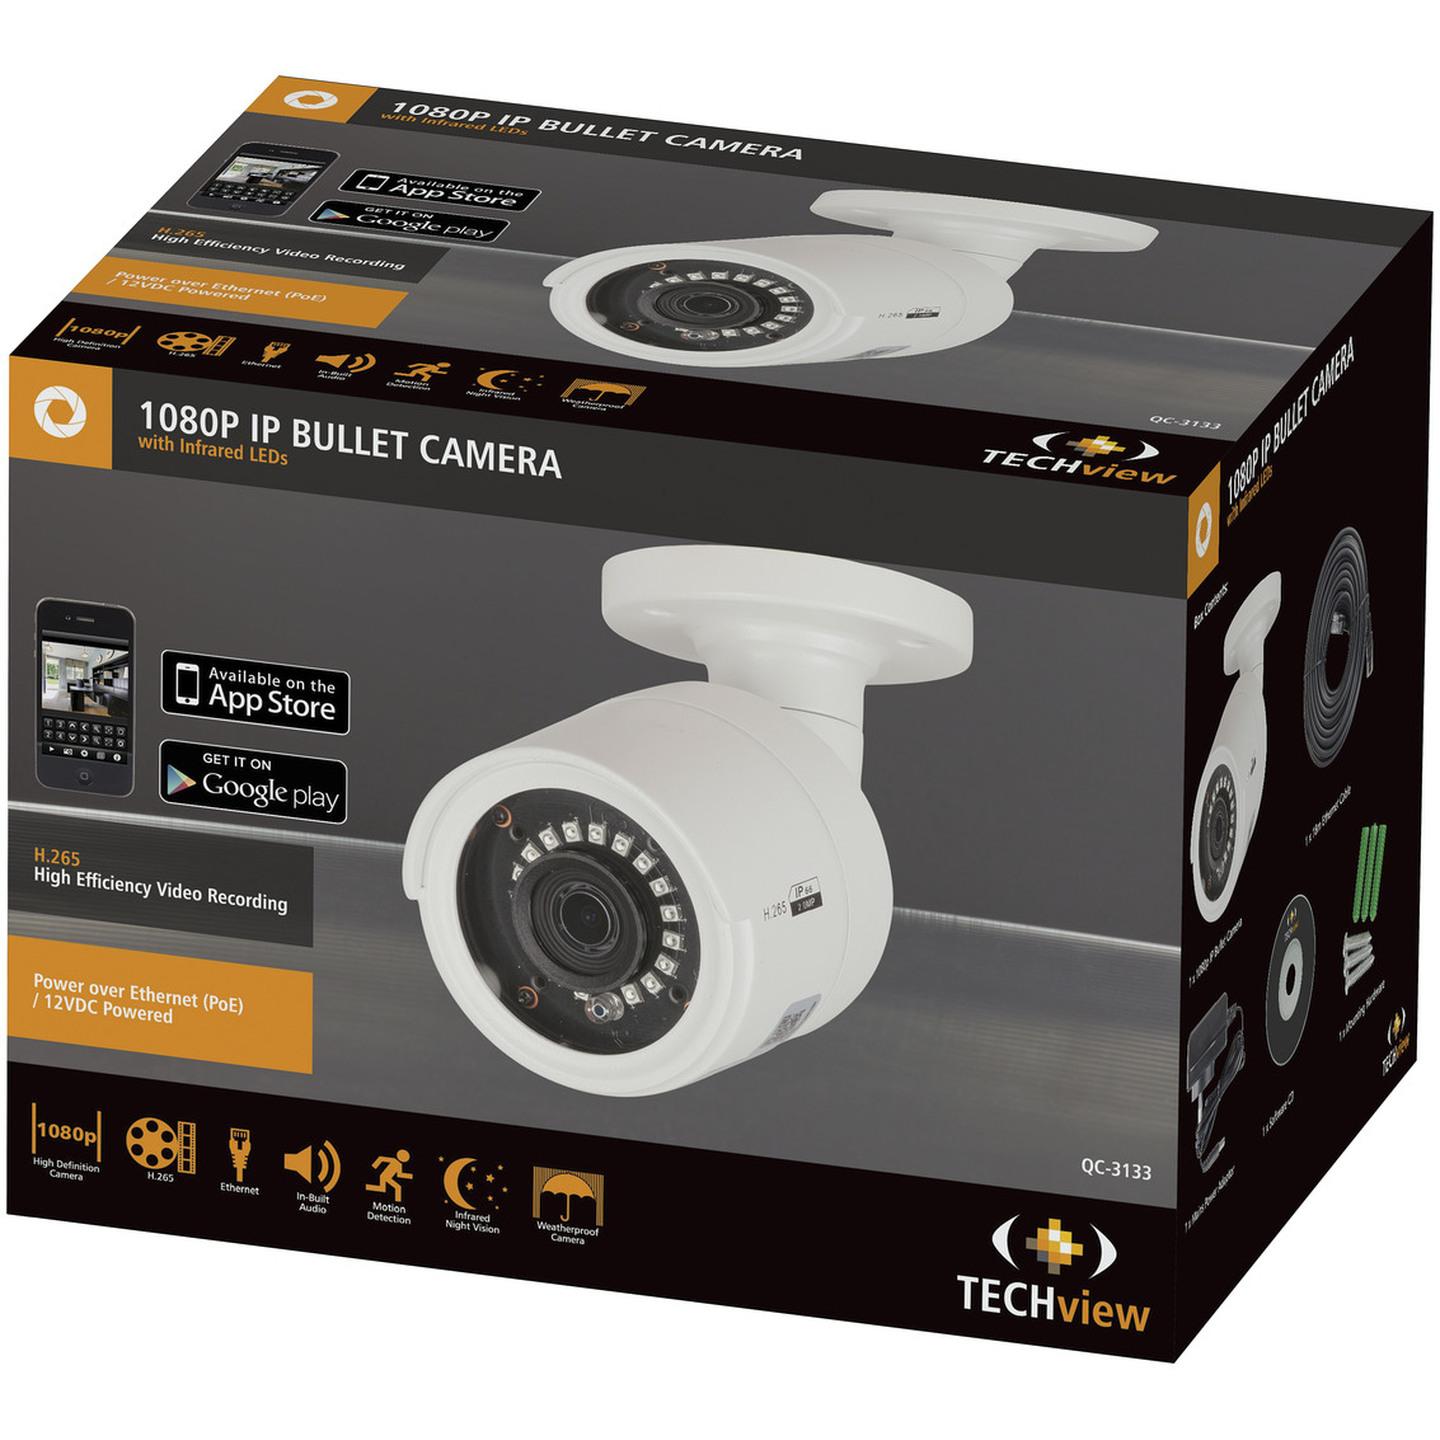 1080p IP Bullet Camera